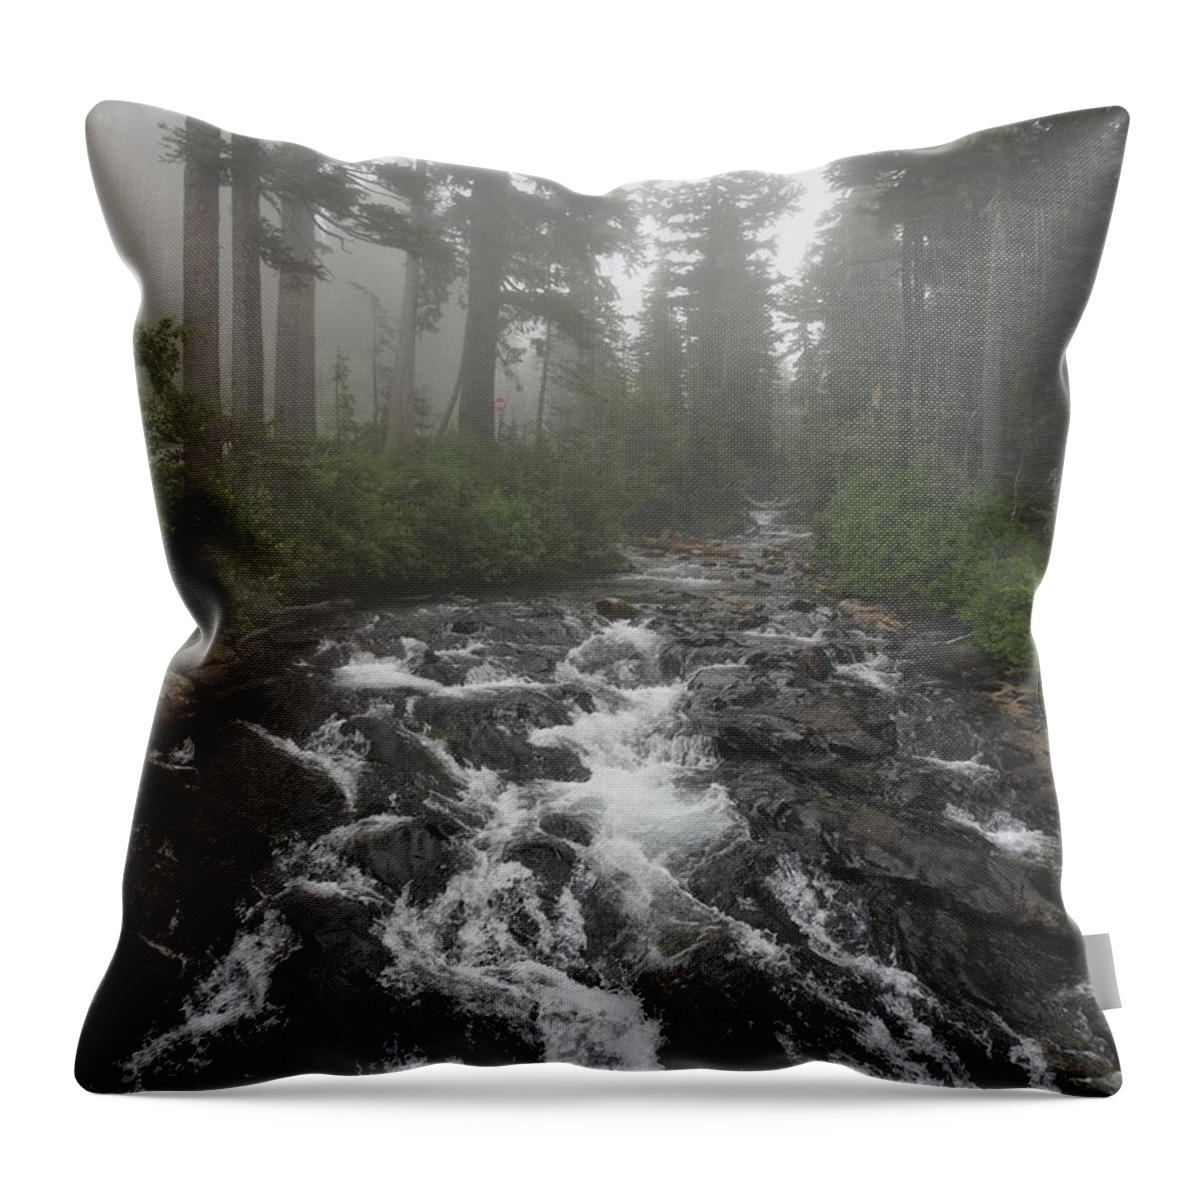 Mount Rainier National Park Washington State Throw Pillow featuring the photograph Mount Rainier National Park by Jacklyn Duryea Fraizer